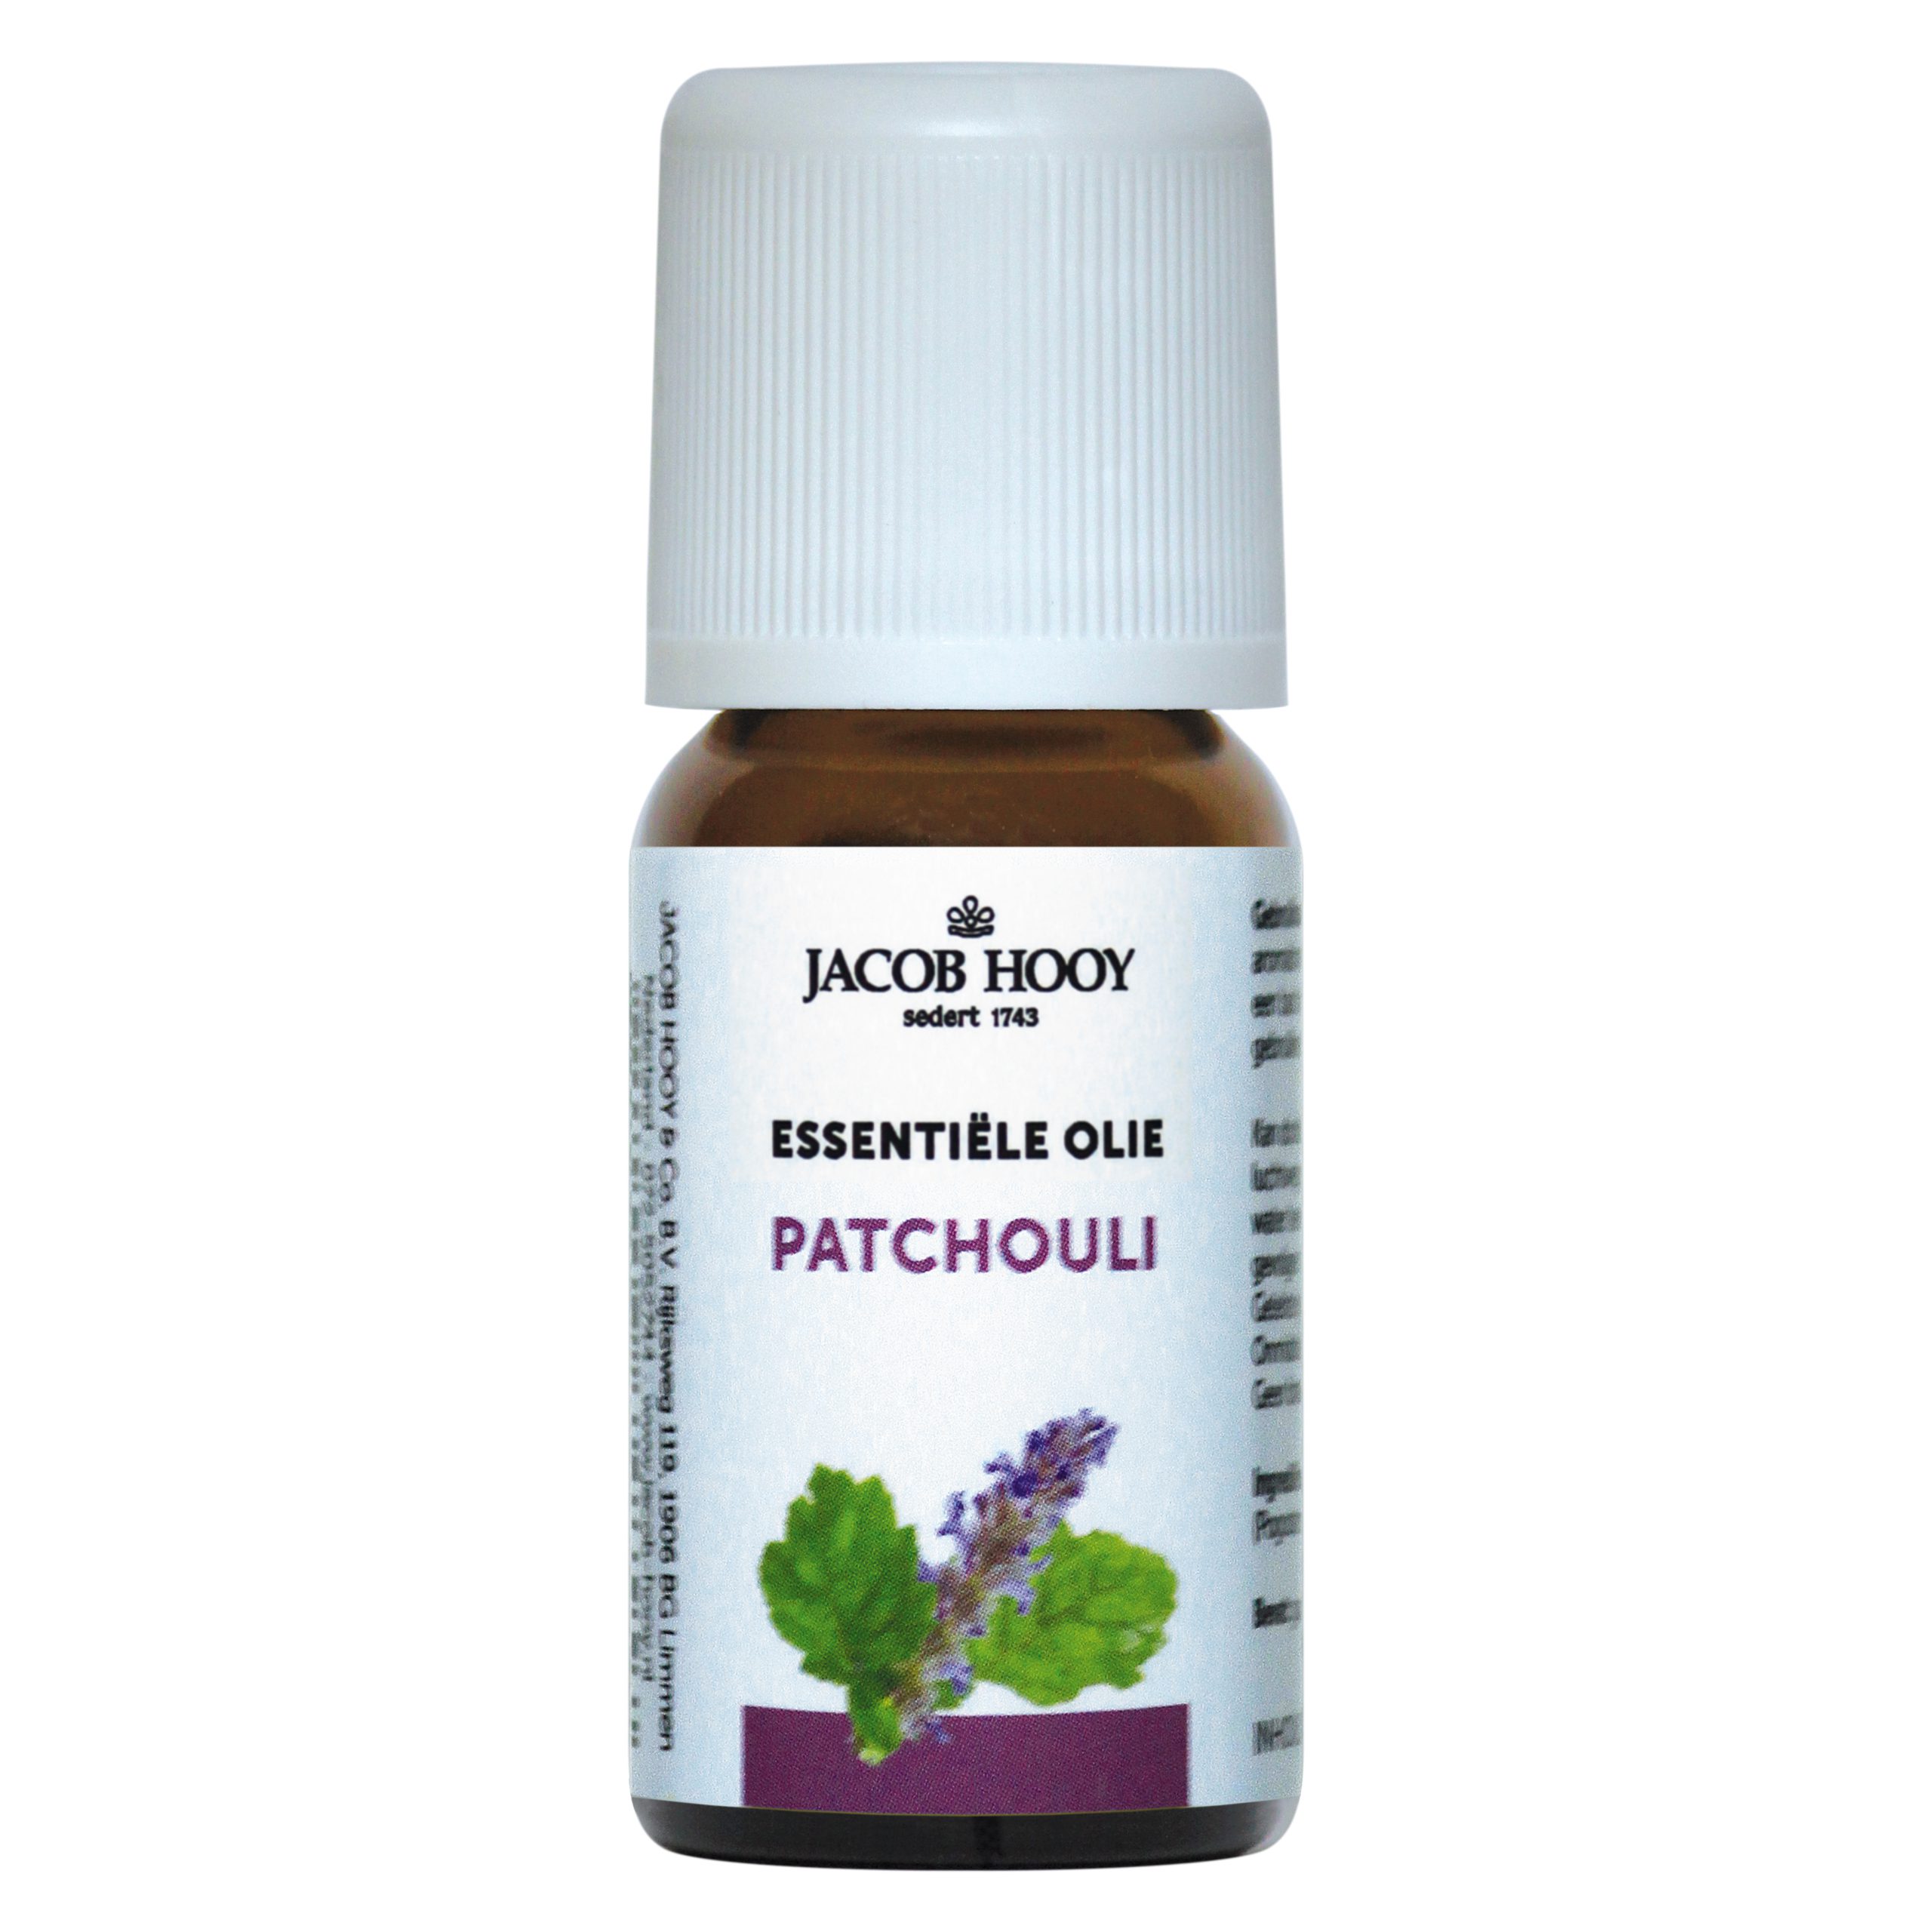 Essentiële olie Patchouli 10 ml